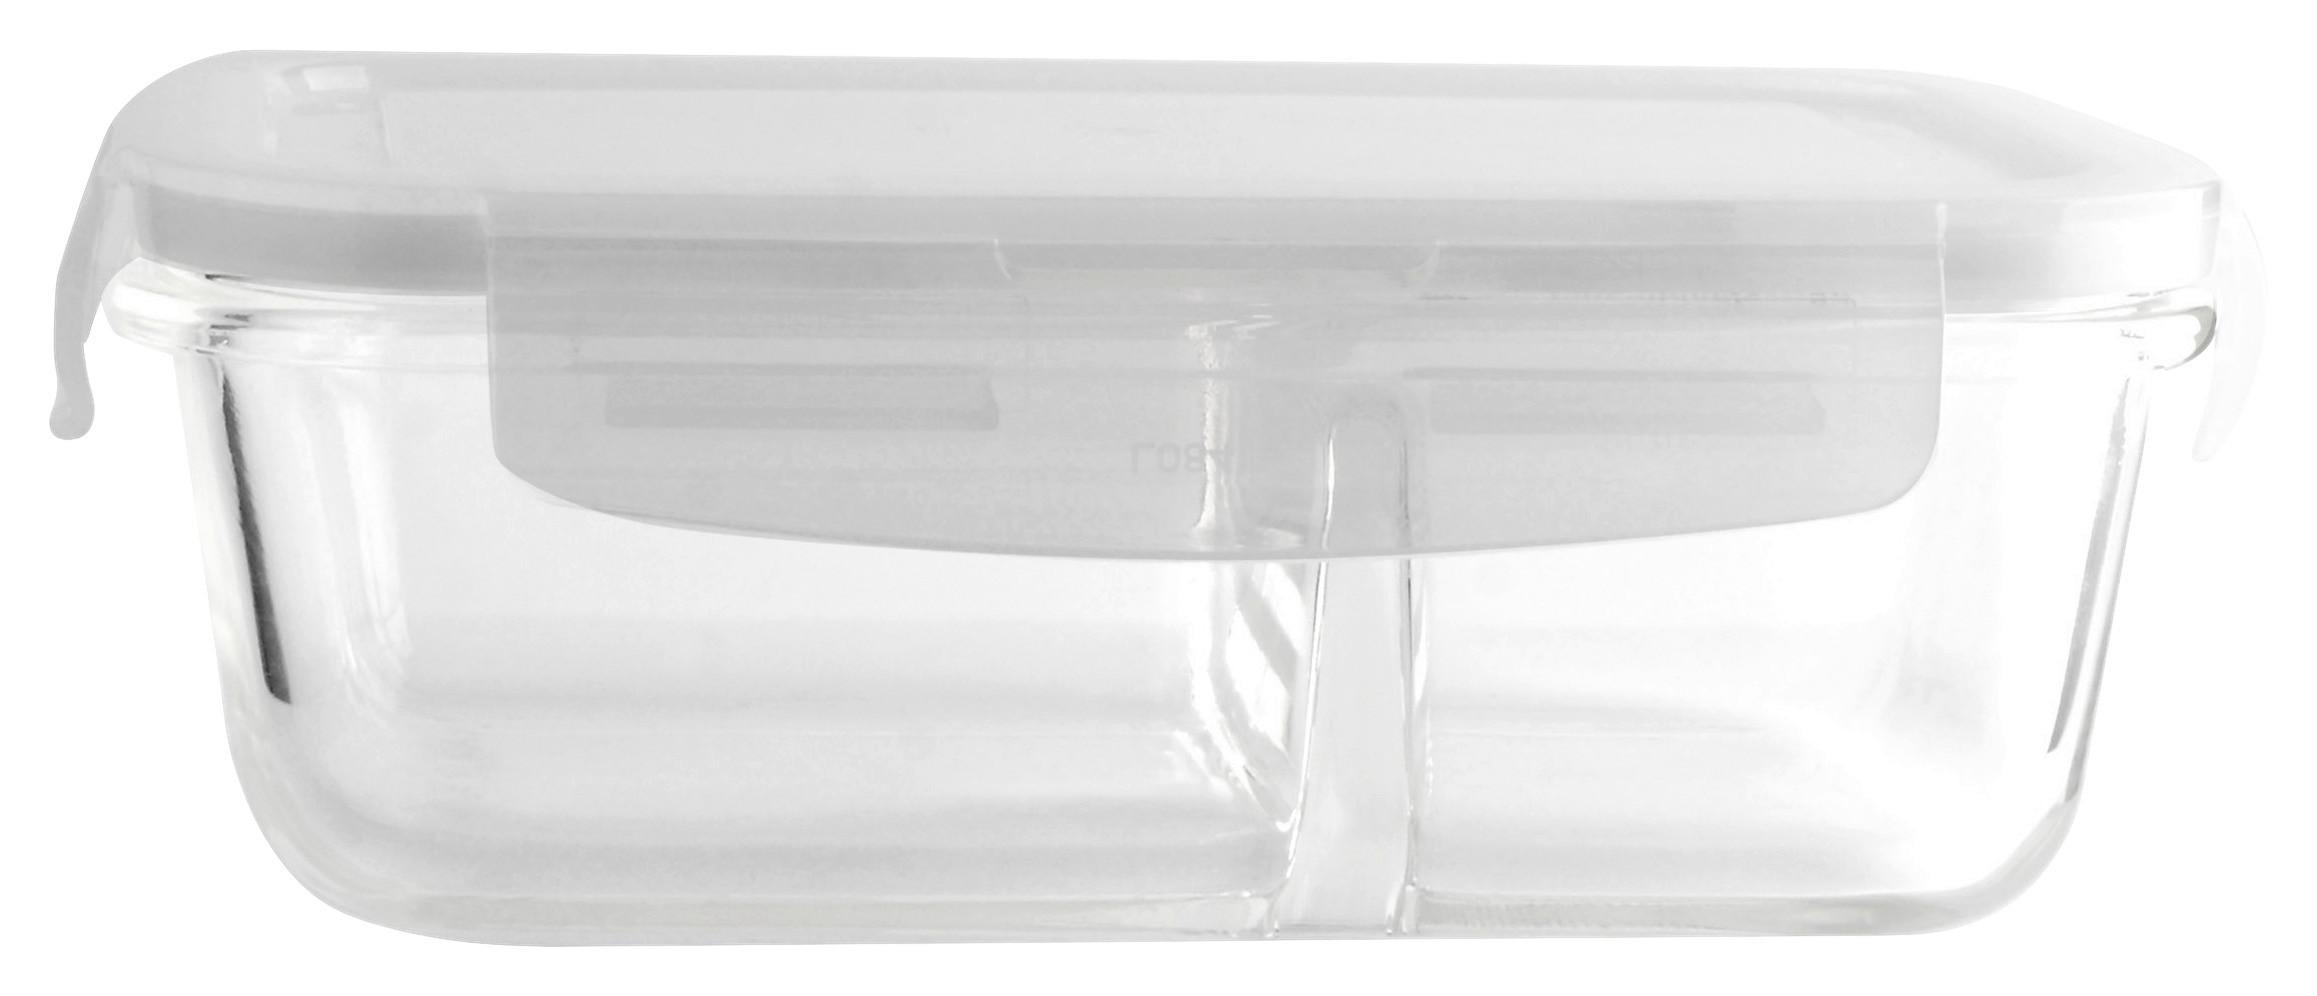 Frischhaltedose Freshy ca. 650ml - Klar, Glas/Kunststoff (13,5/19,4/6,7cm) - Premium Living